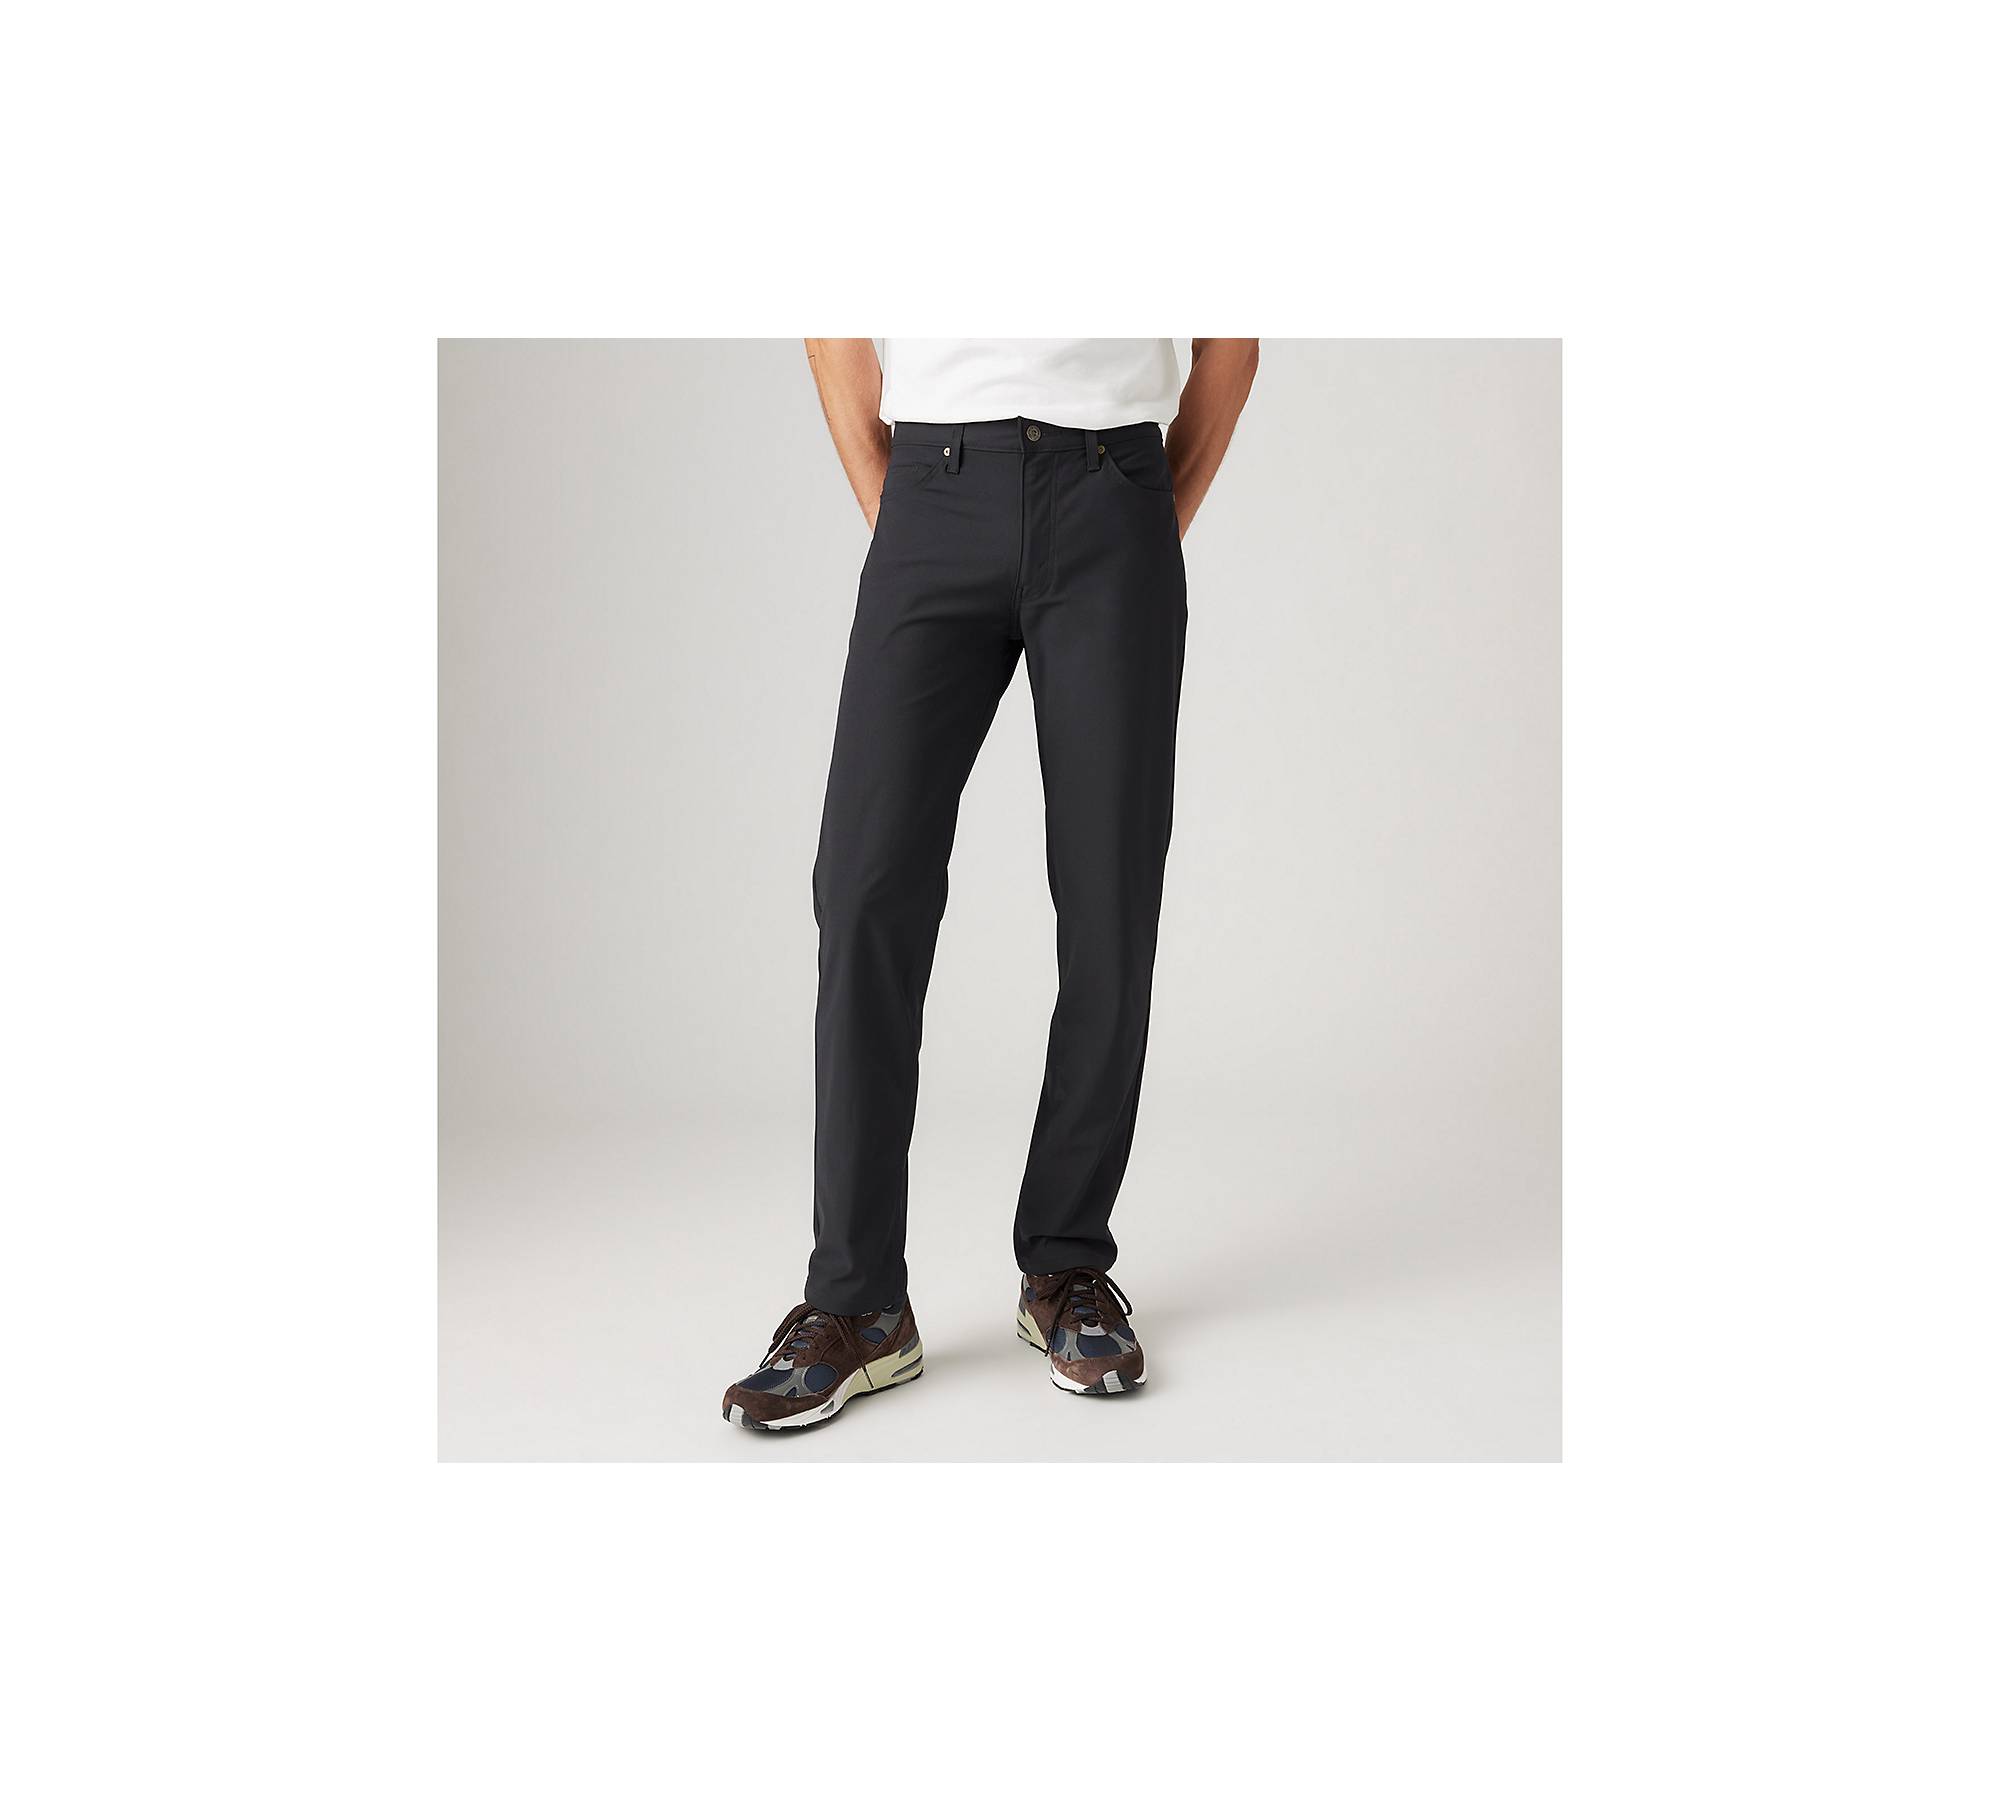 Little Black Pant Solid Black Casual Pants Size 14 - 67% off